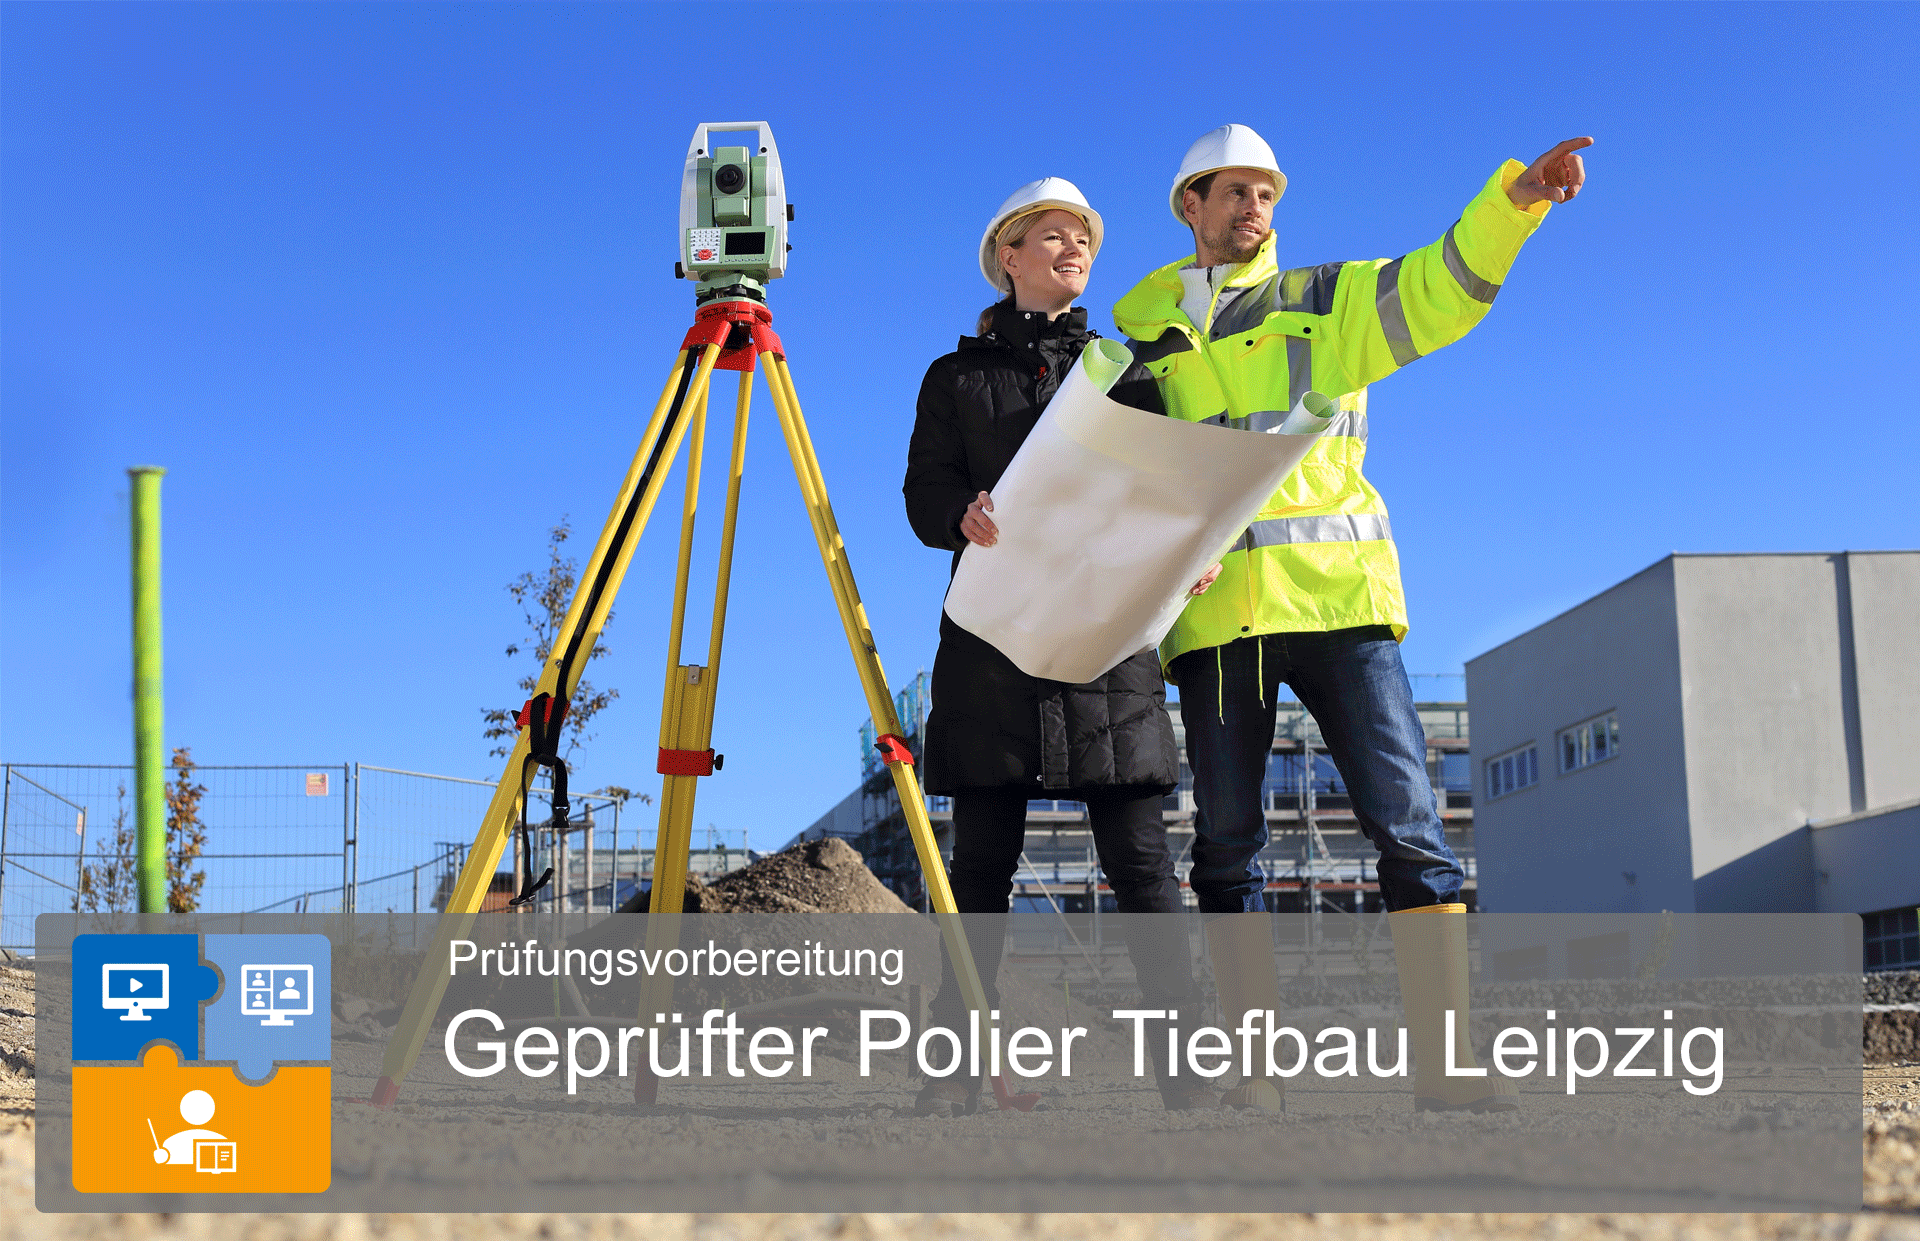 Prüfungsvorbereitung Geprüfter Polier Tiefbau (Leipzig) course image